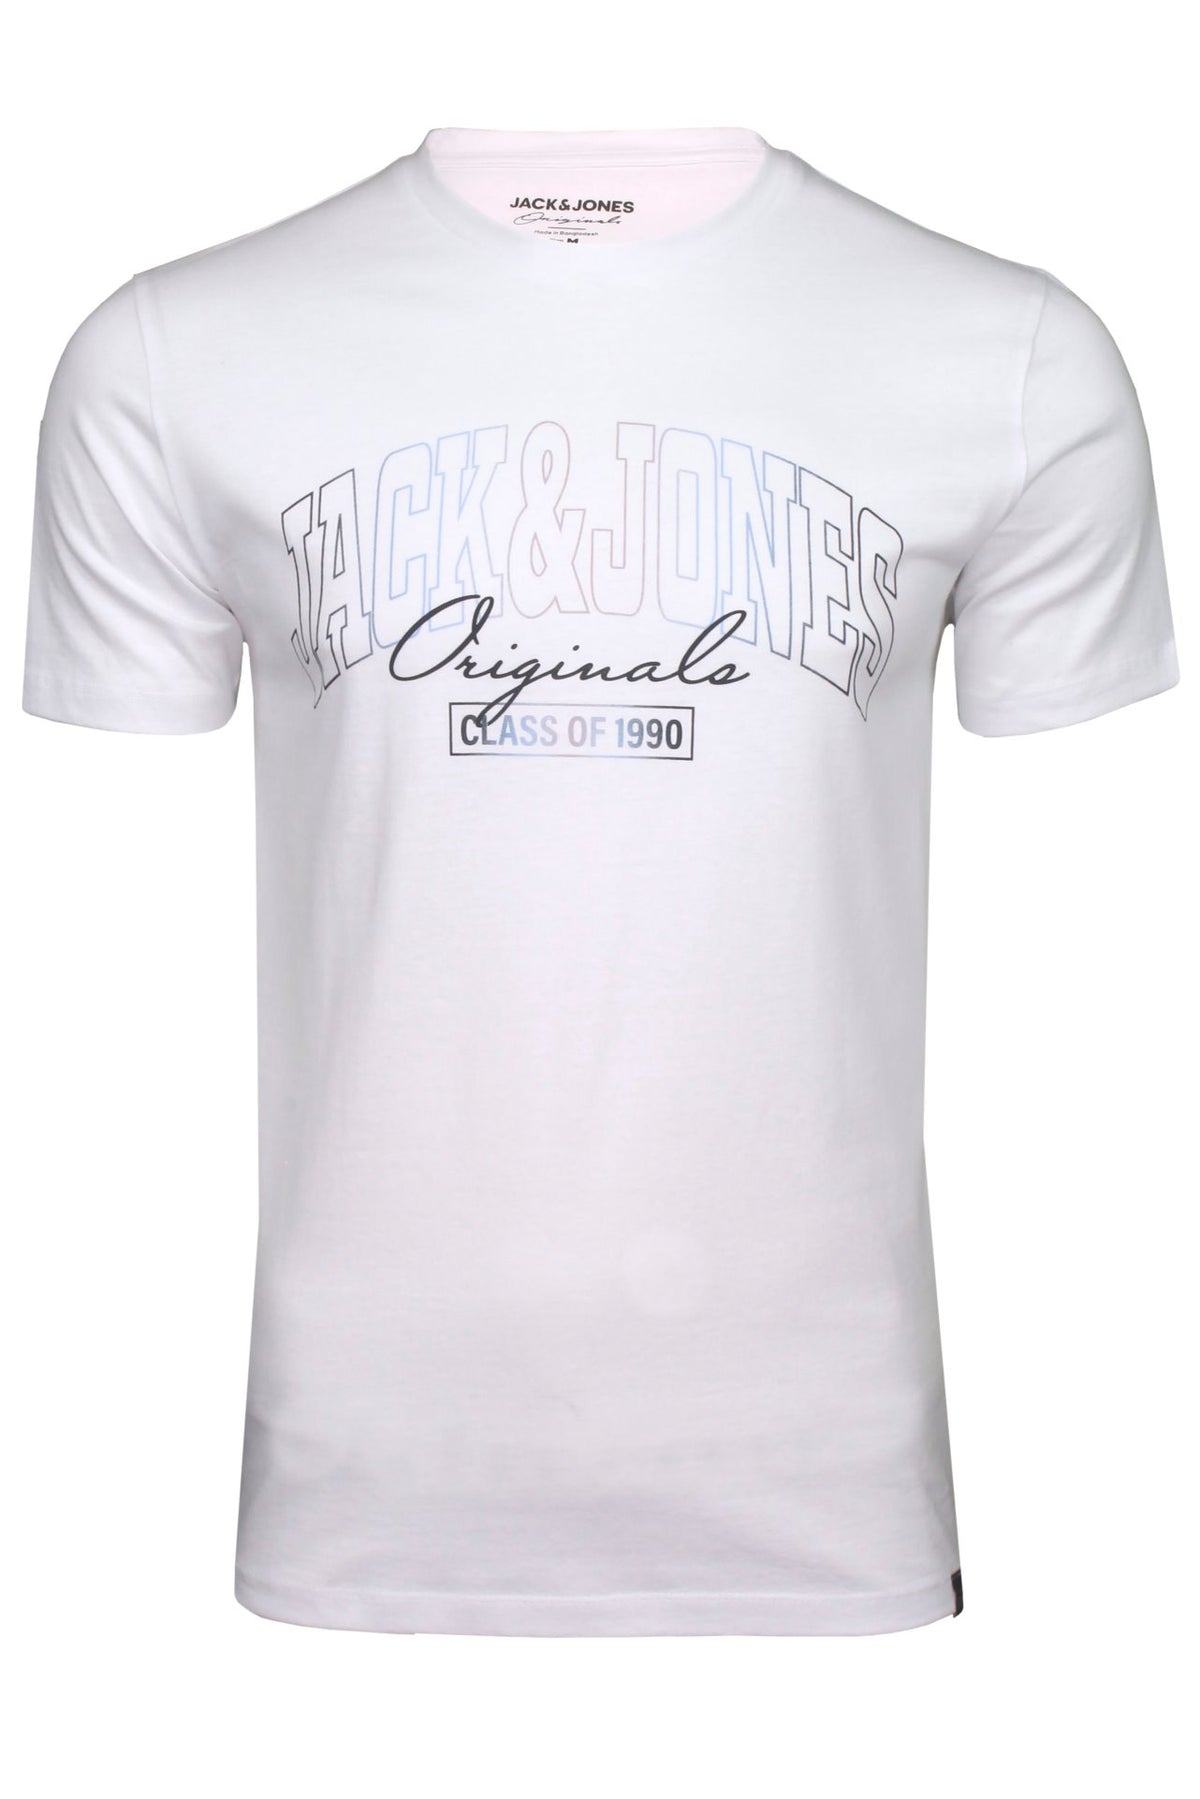 Jack & Jones Mens T-Shirt 'Jor Penny Tee', 01, 12207694, Bright White